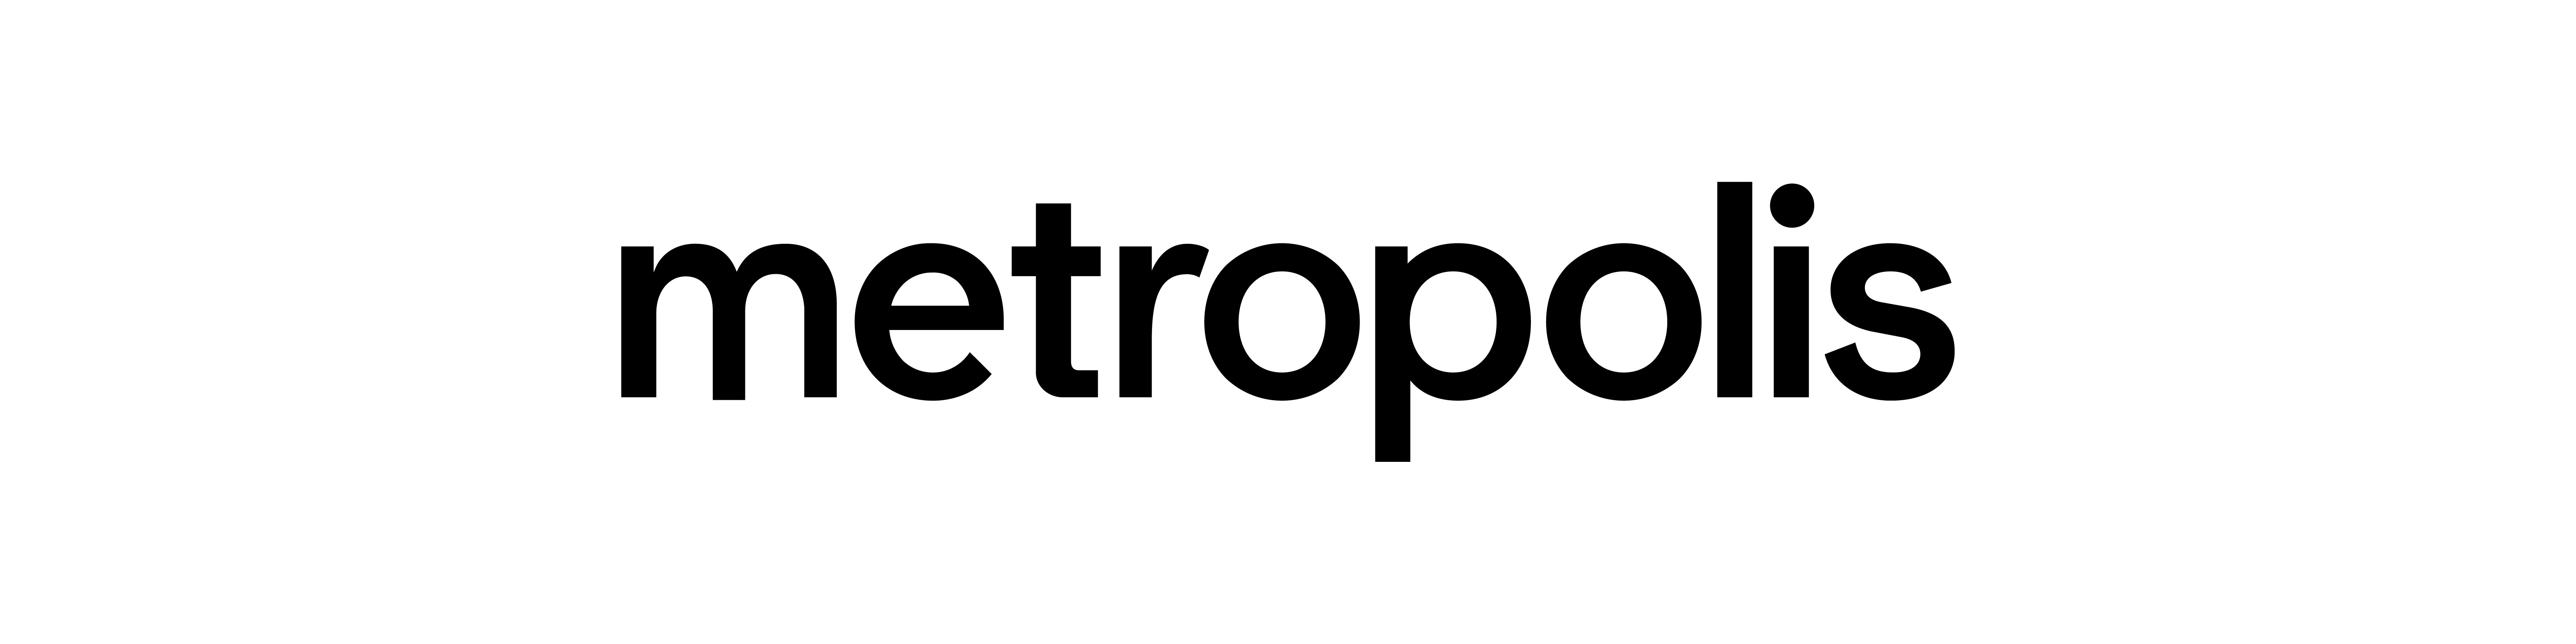 METROPOLIS TECHNOLOGIES